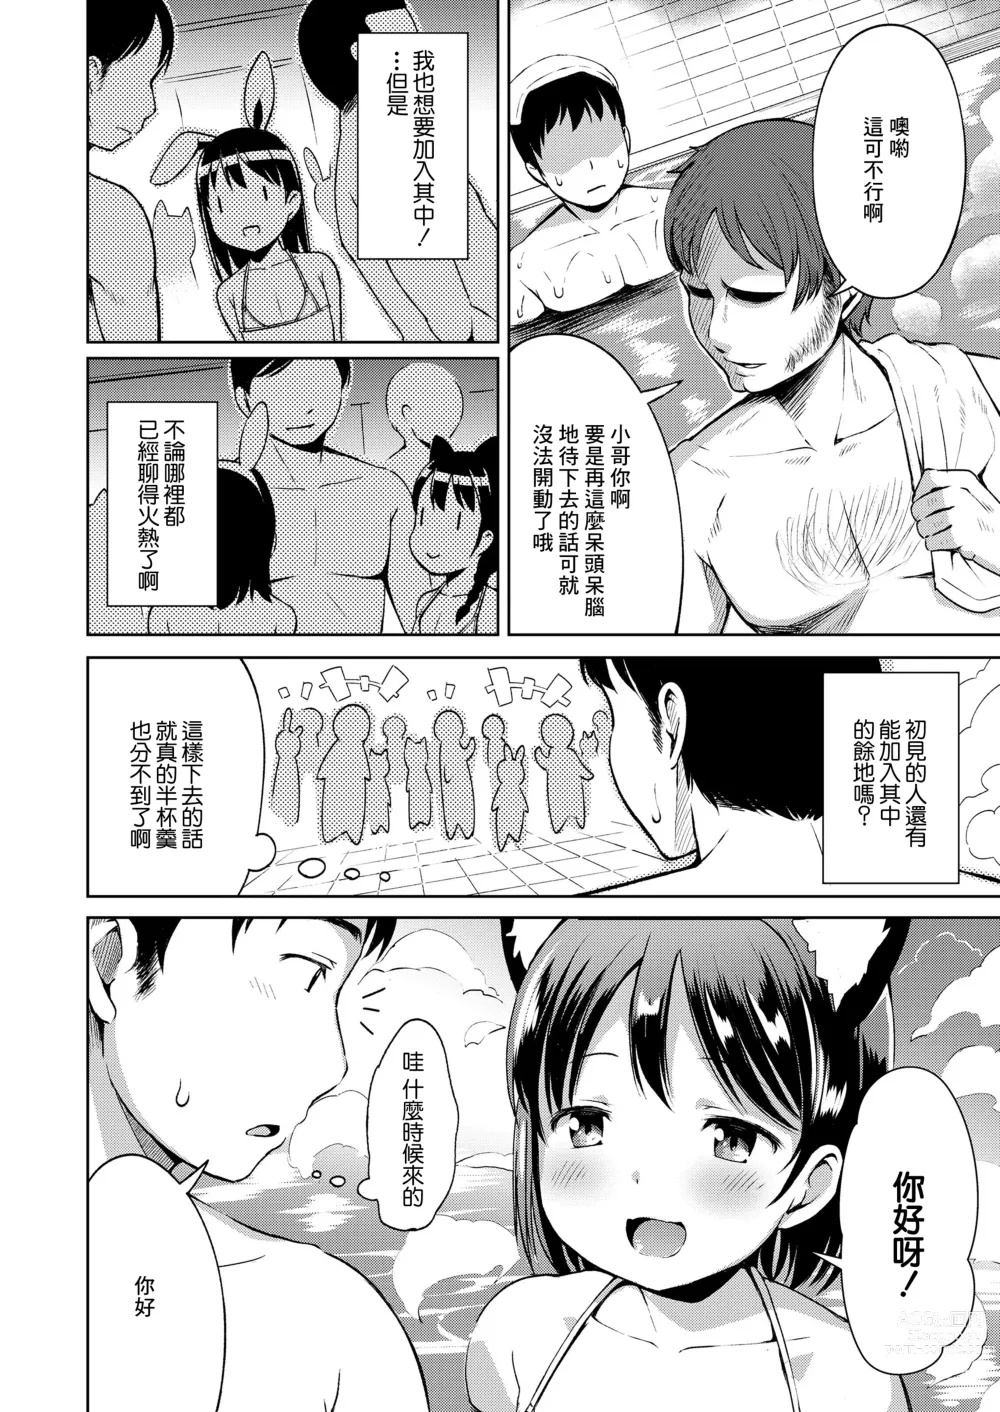 Page 4 of manga Yuno-chan Play